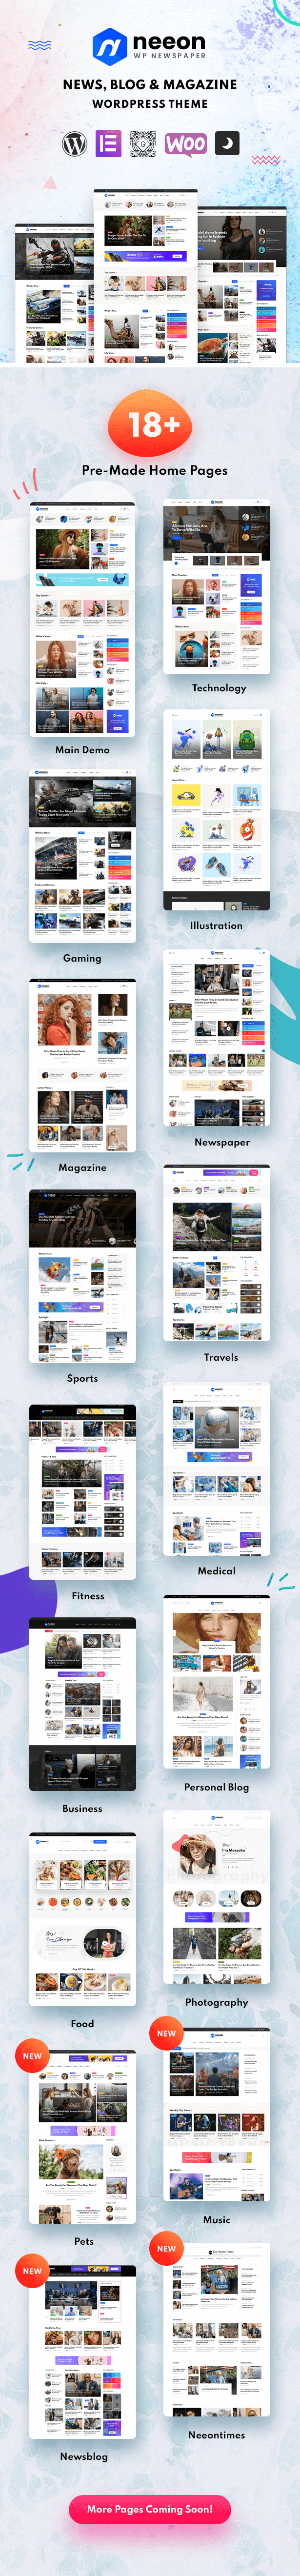 news magazine WordPress Theme 1 - Neeon - WordPress News Magazine Theme